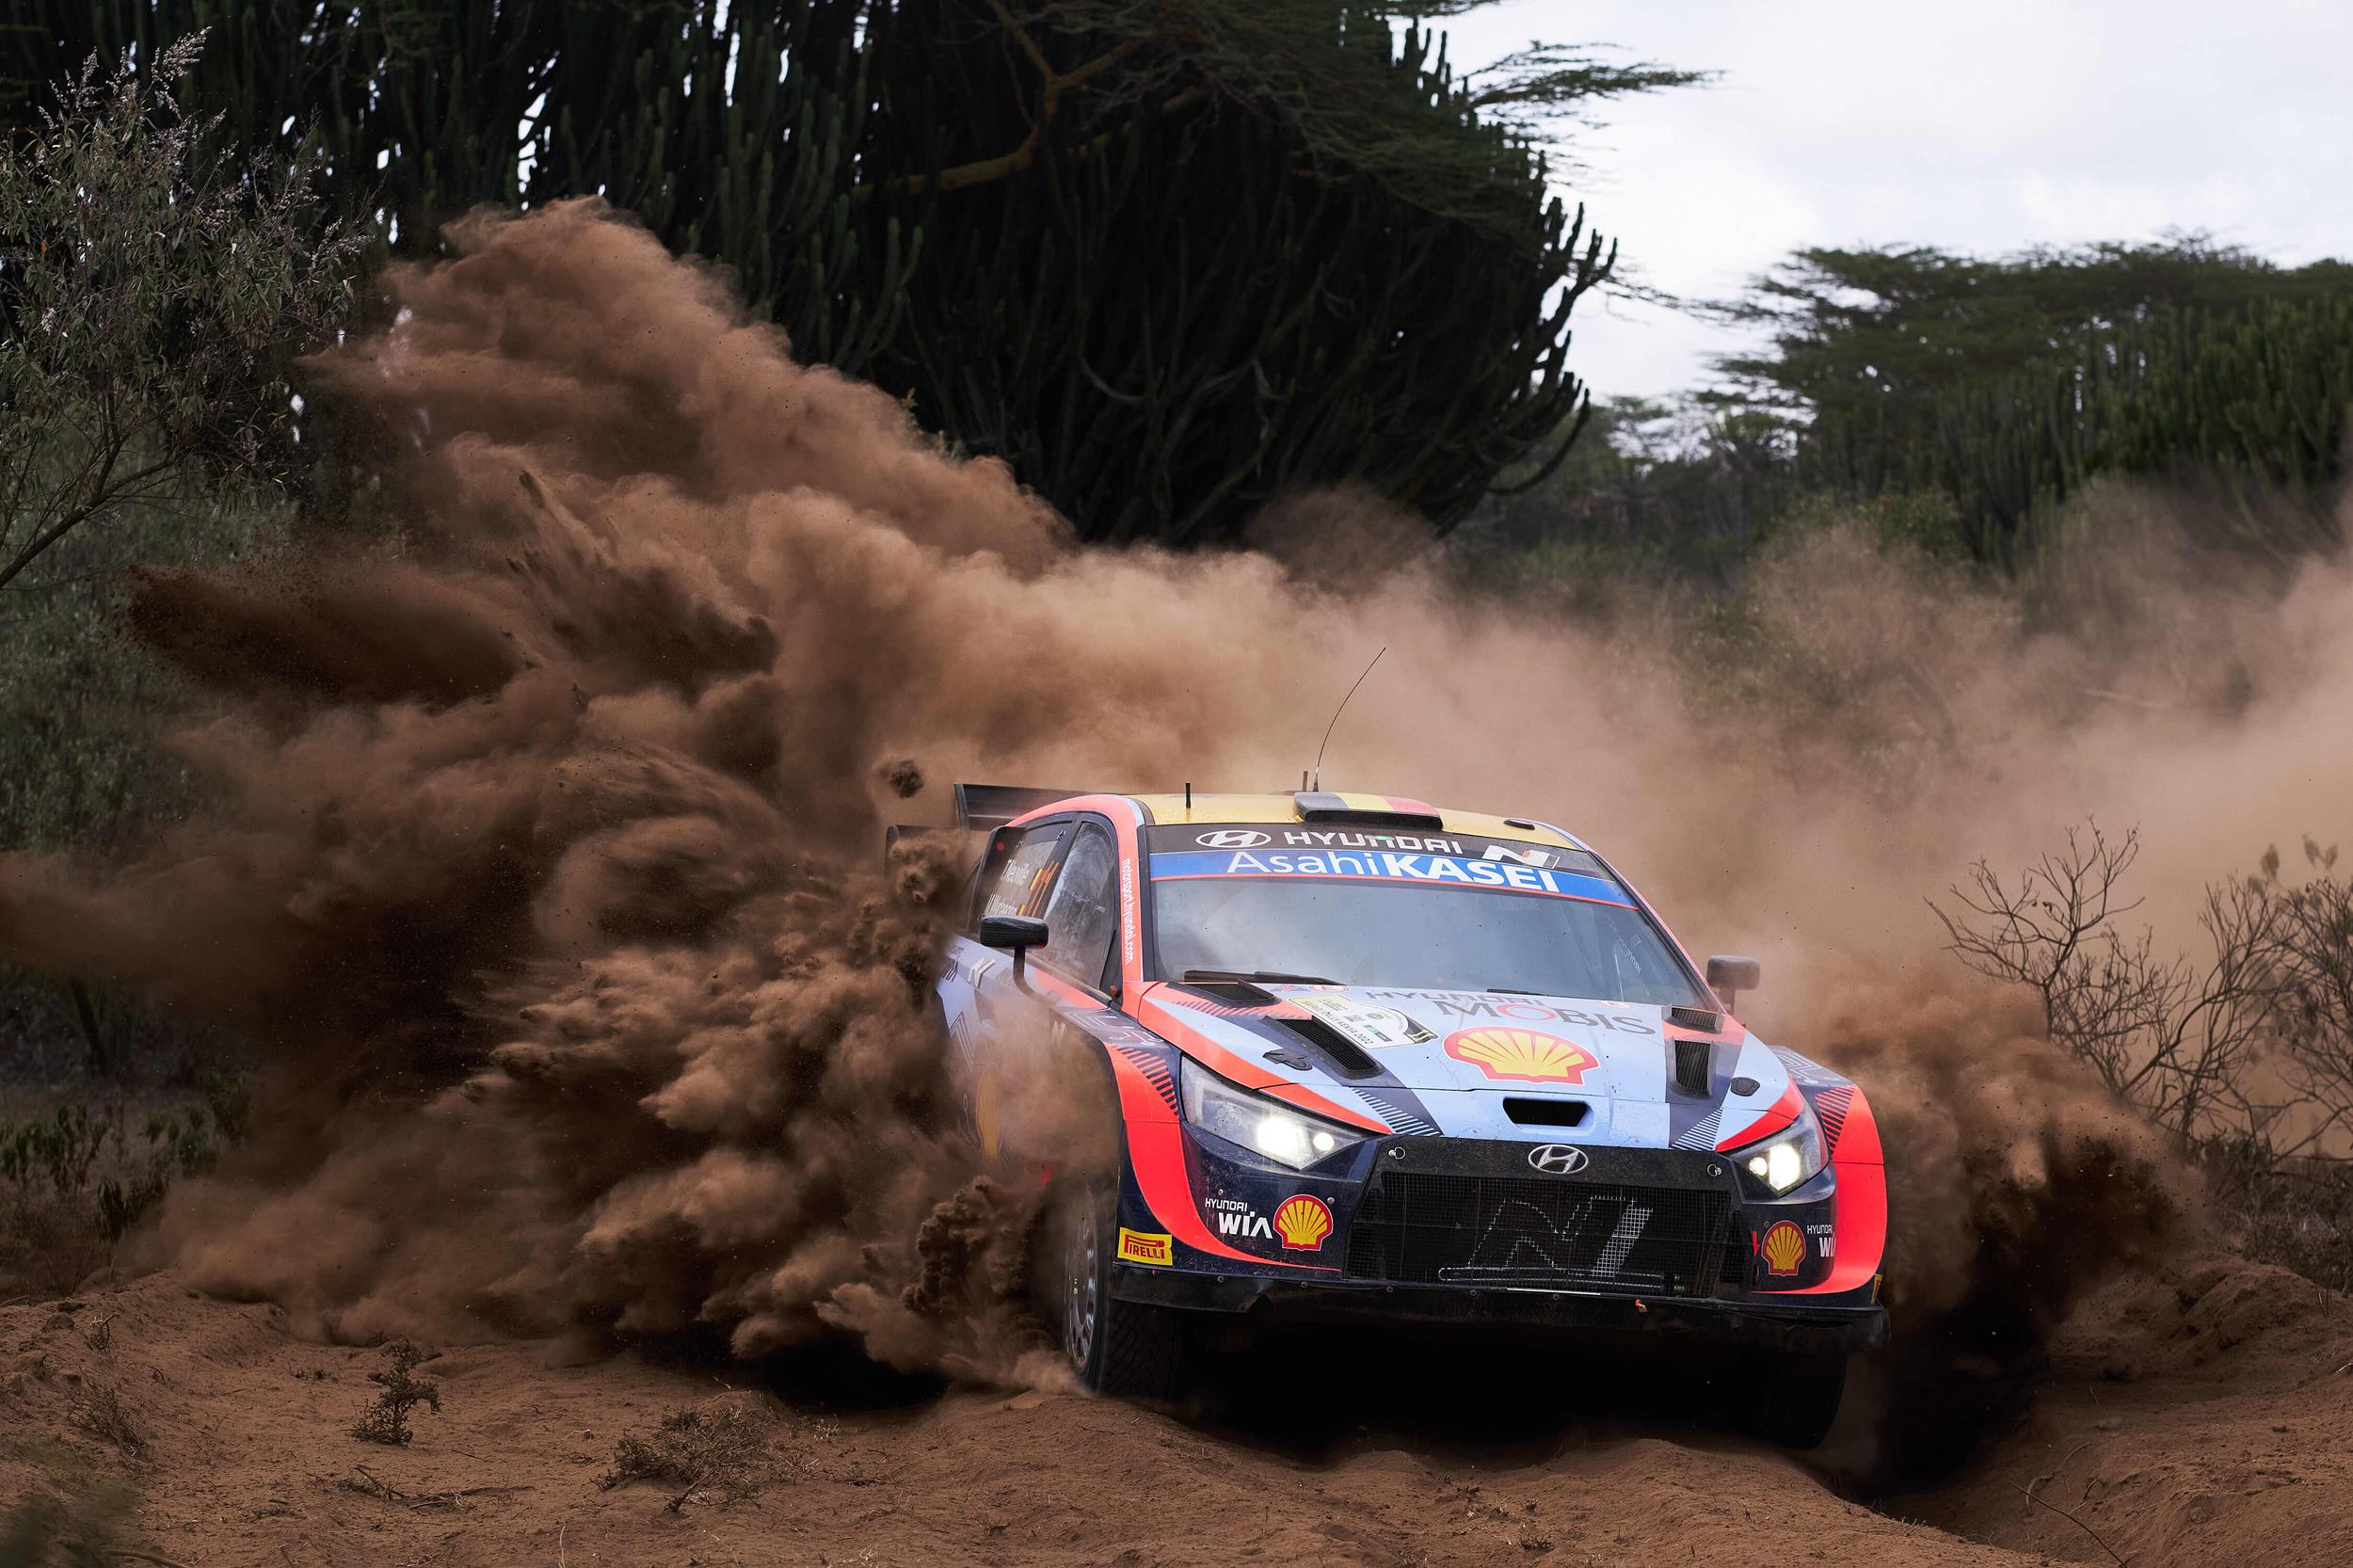 Hyundai Motorsport set for tough test in Safari Rally Kenya